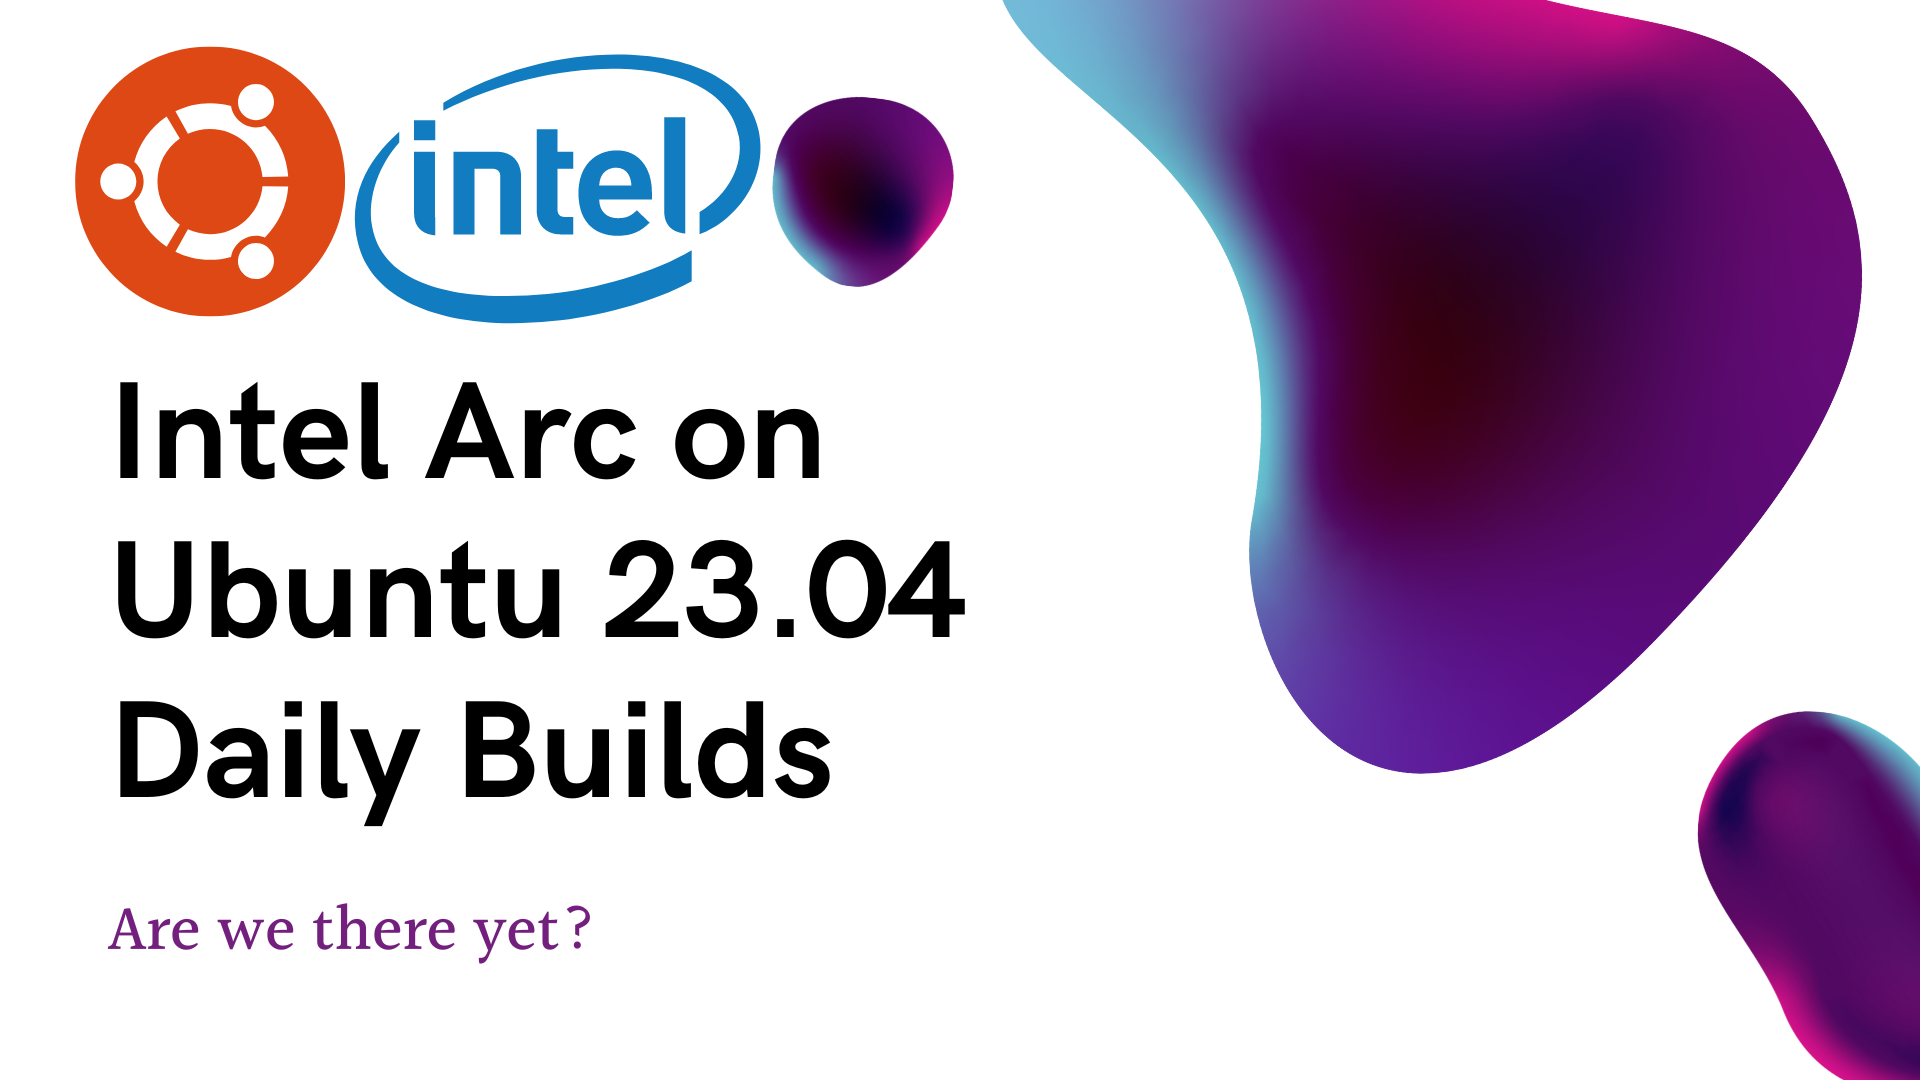 Intel Arc on Ubuntu 23.04 Daily Builds